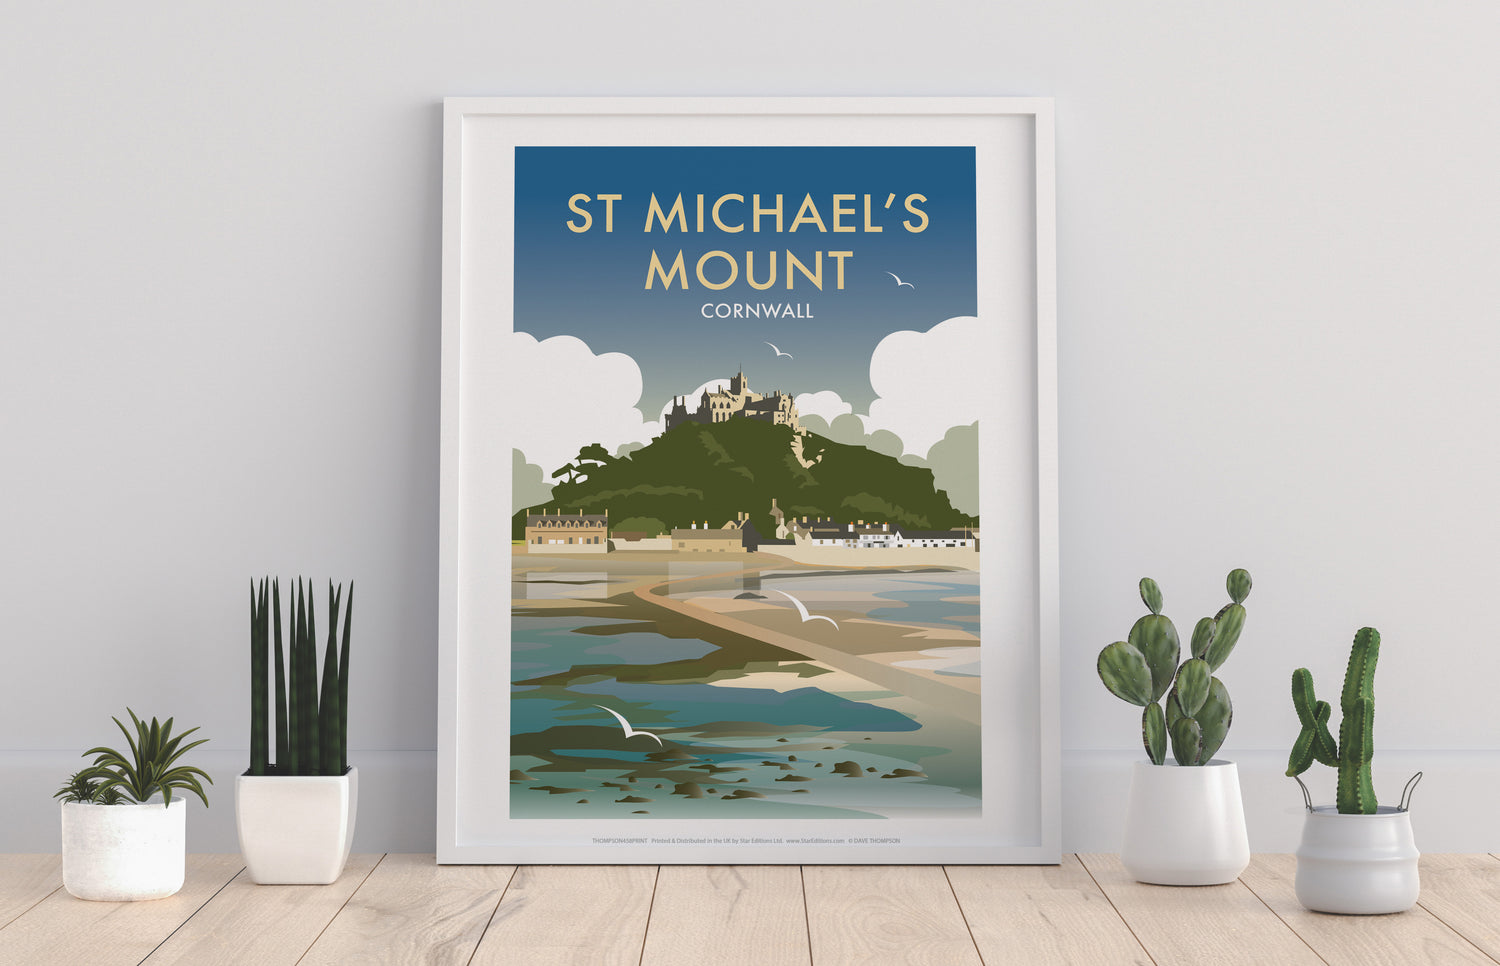 St Michaels Mount, Cornwall - Art Print